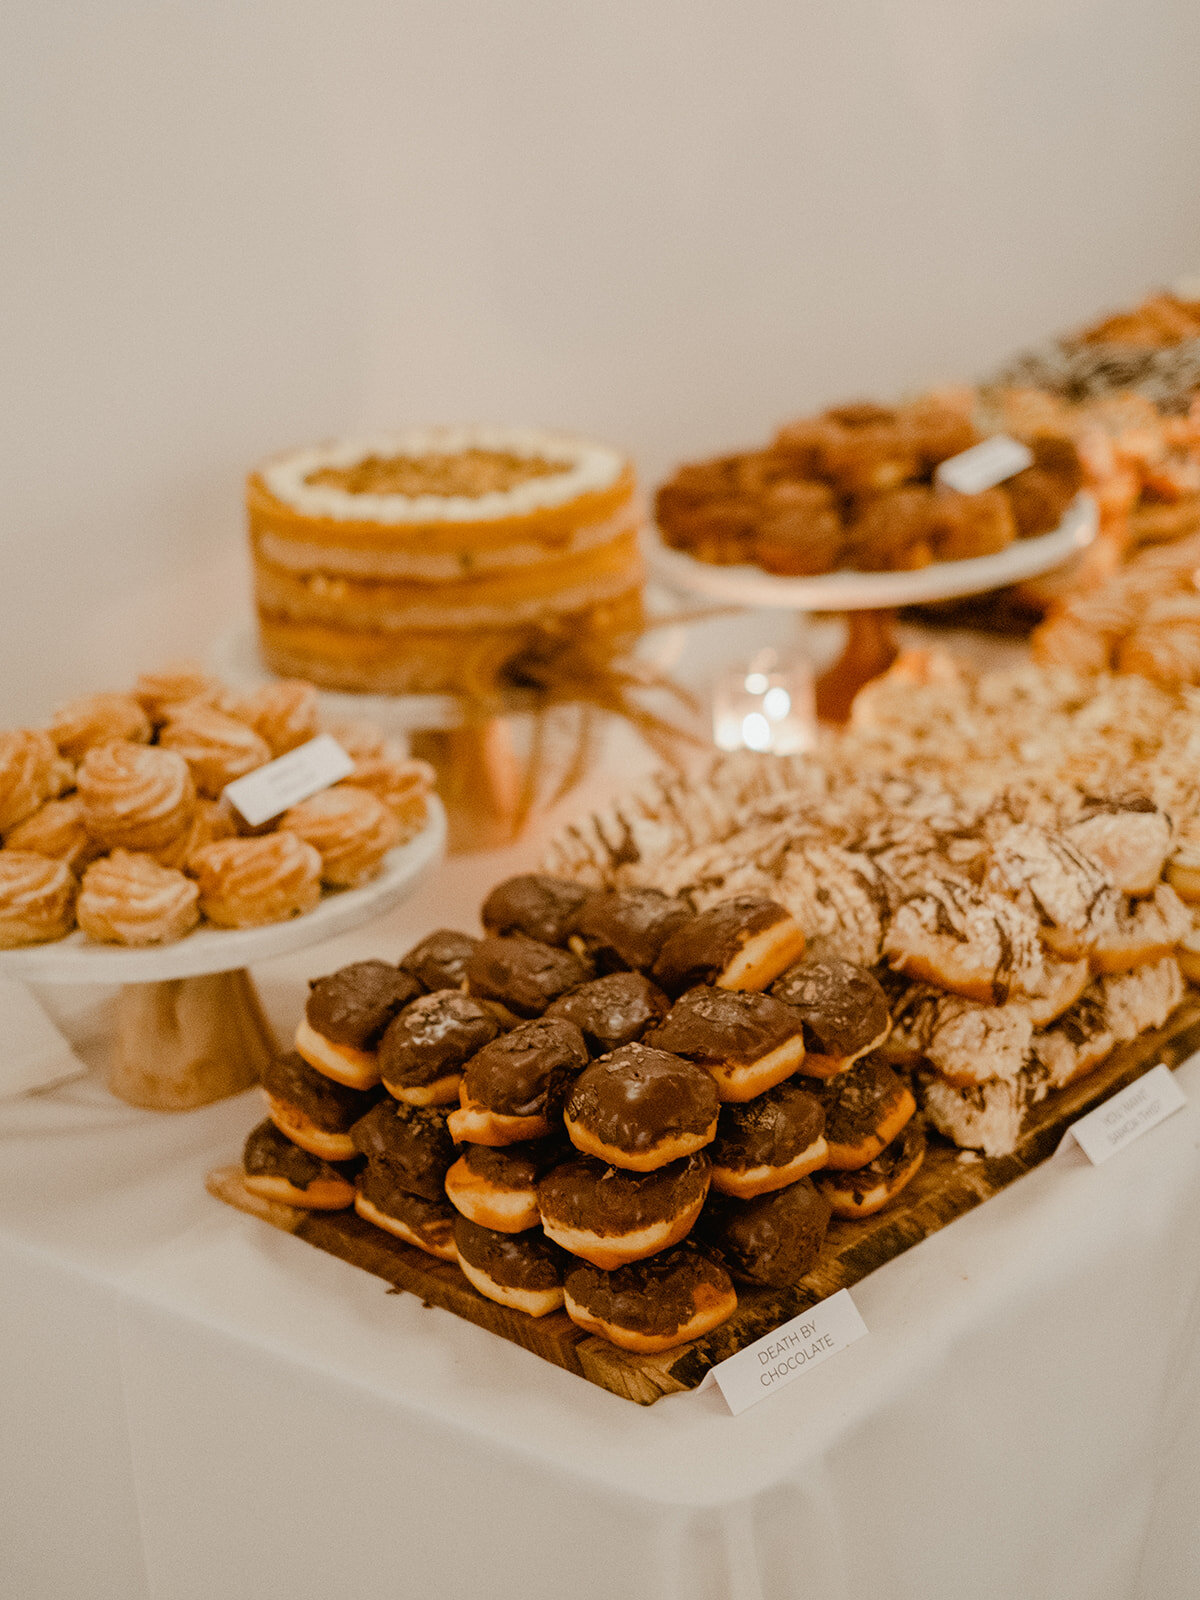 hutton-house-wedding-donuts-dessert-table